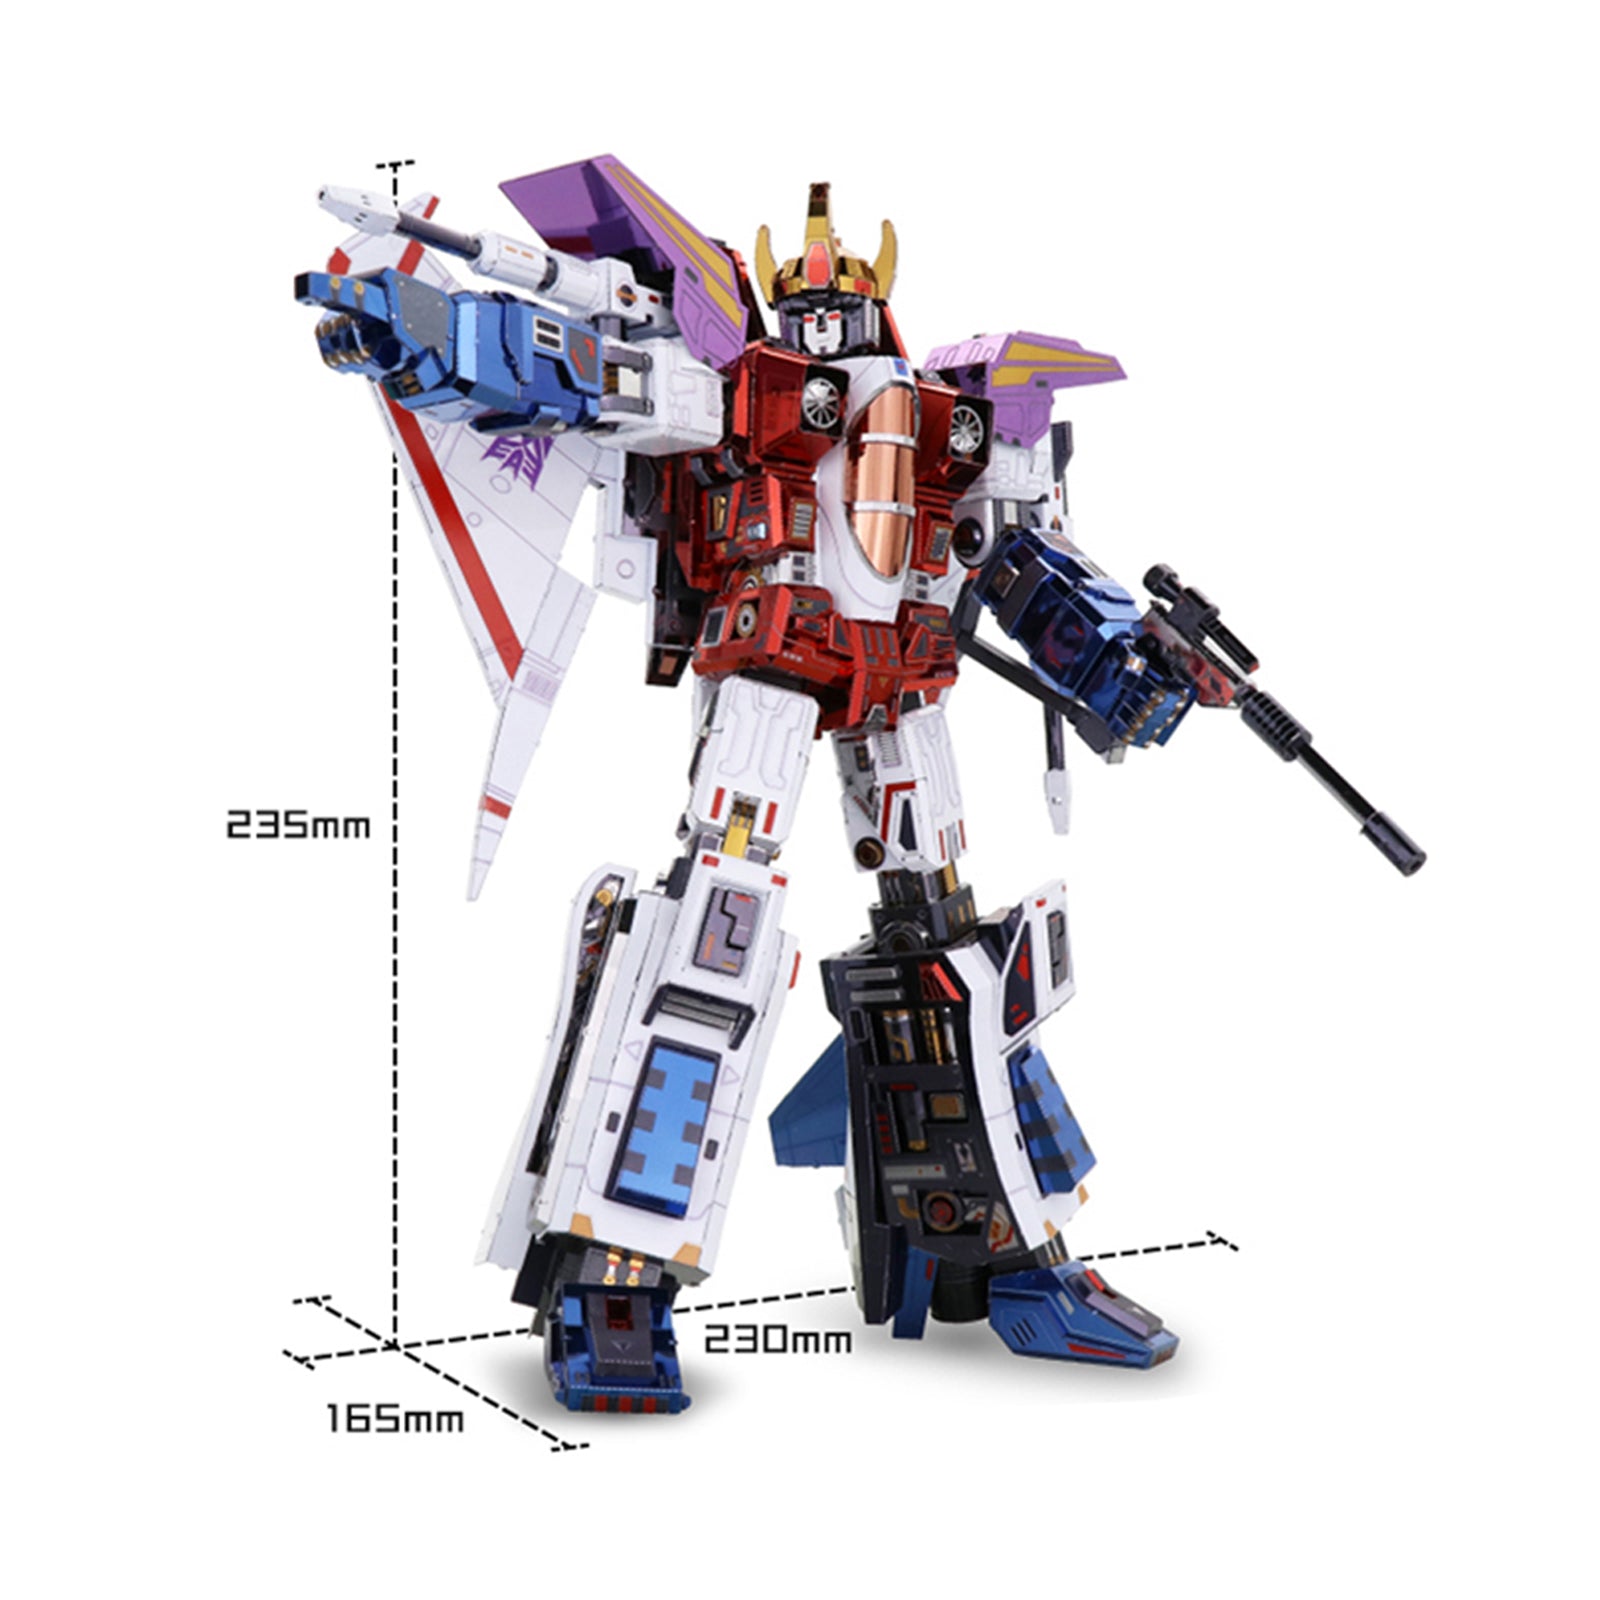 Transformers: Generation 1 - 23.5cm Starscream 3D Metal Puzzle Model Kit